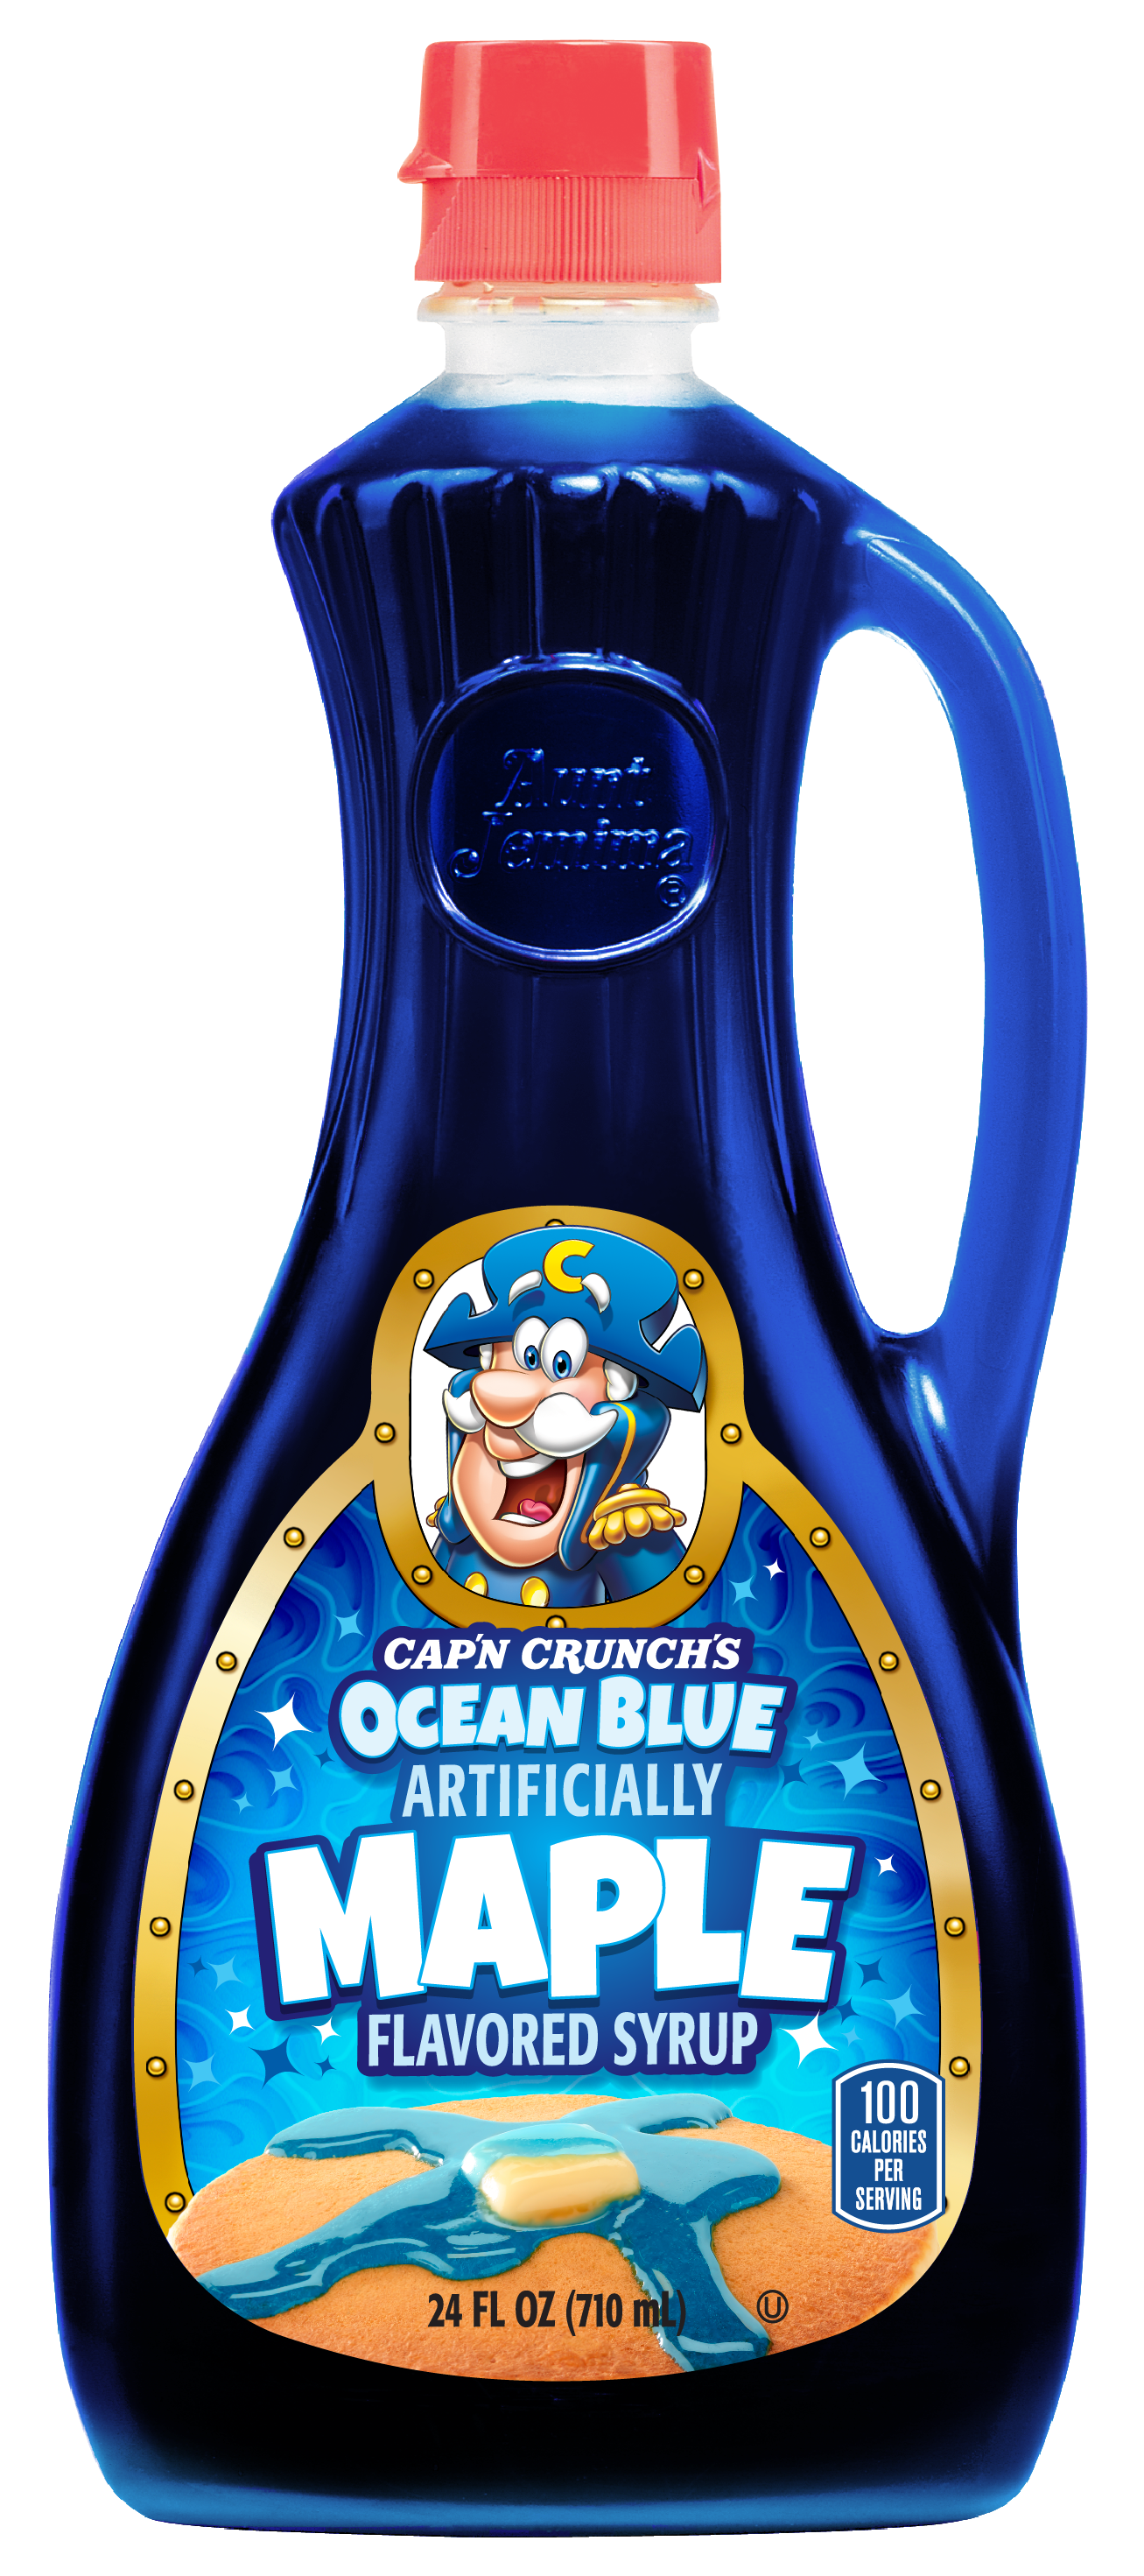  Cap’n Crunch’s Ocean Blue Maple Flavored Syrup